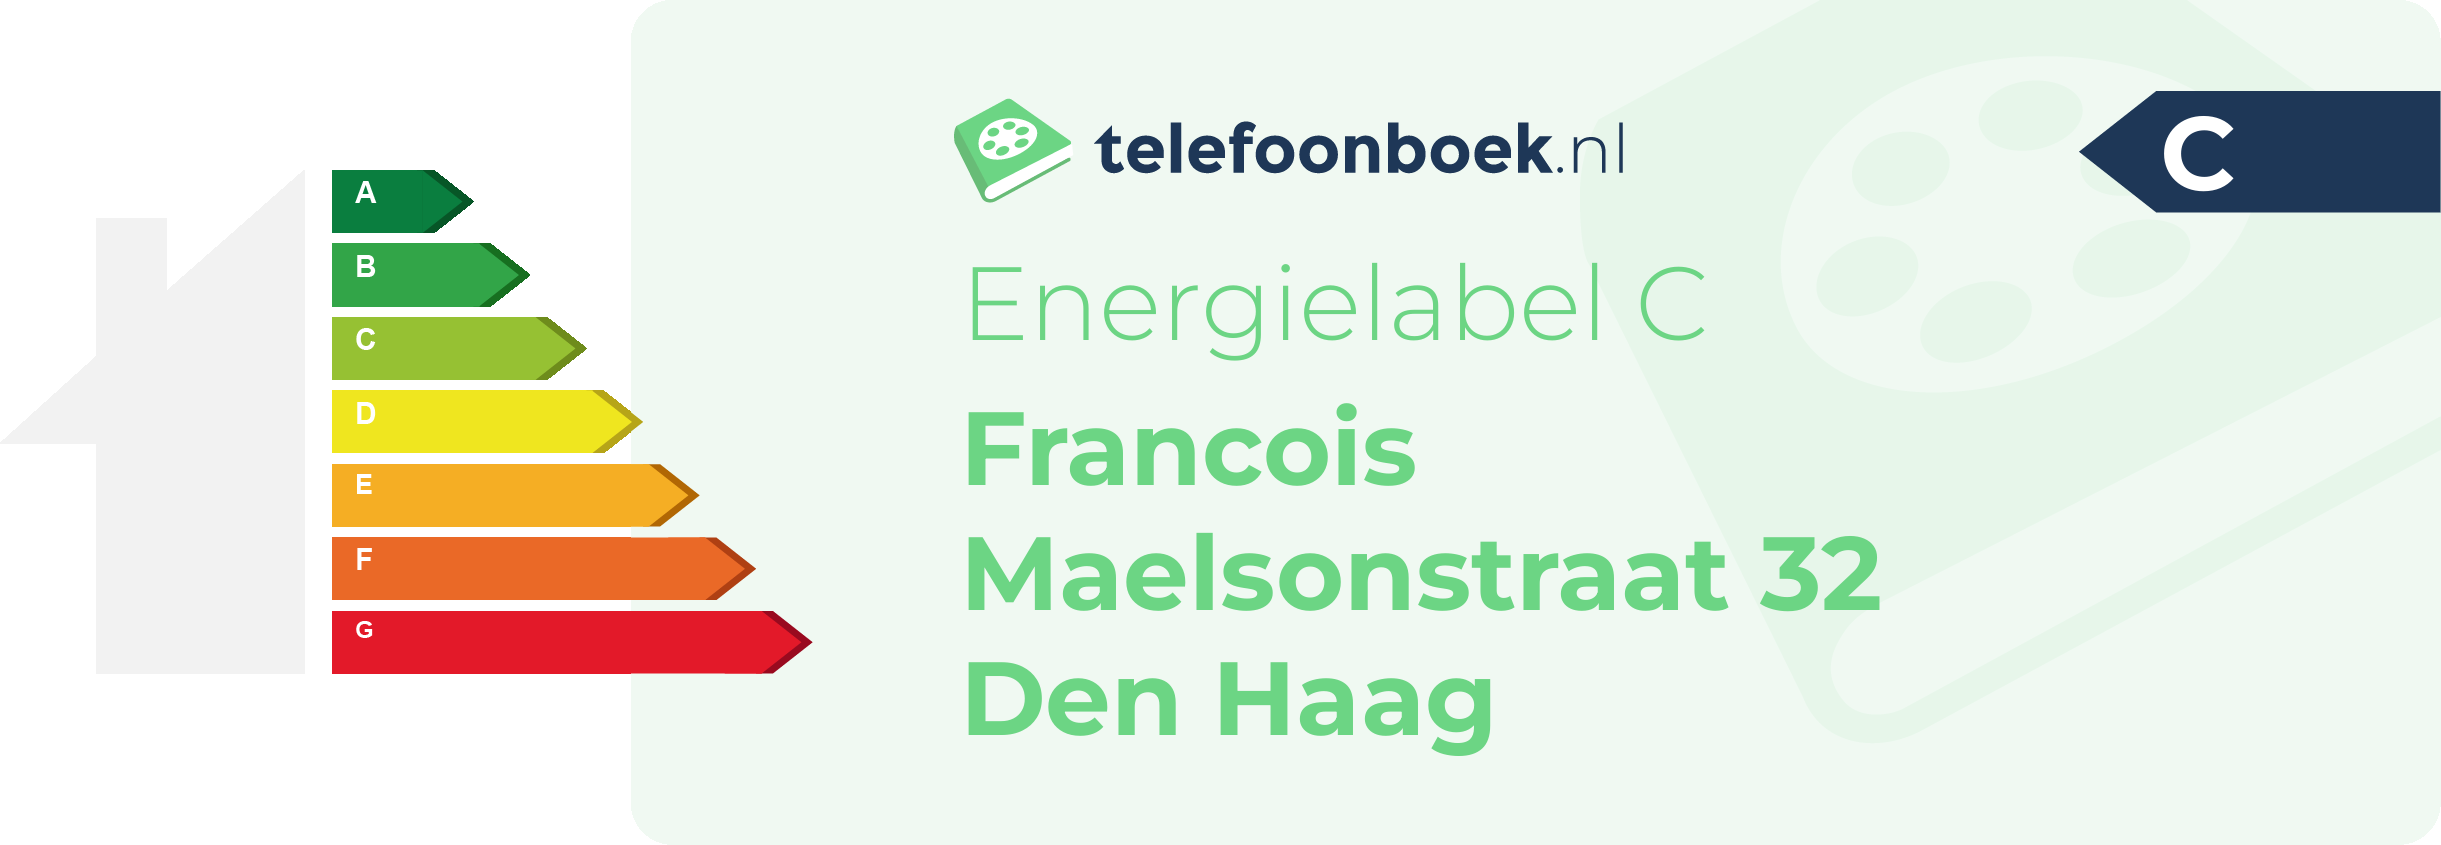 Energielabel Francois Maelsonstraat 32 Den Haag